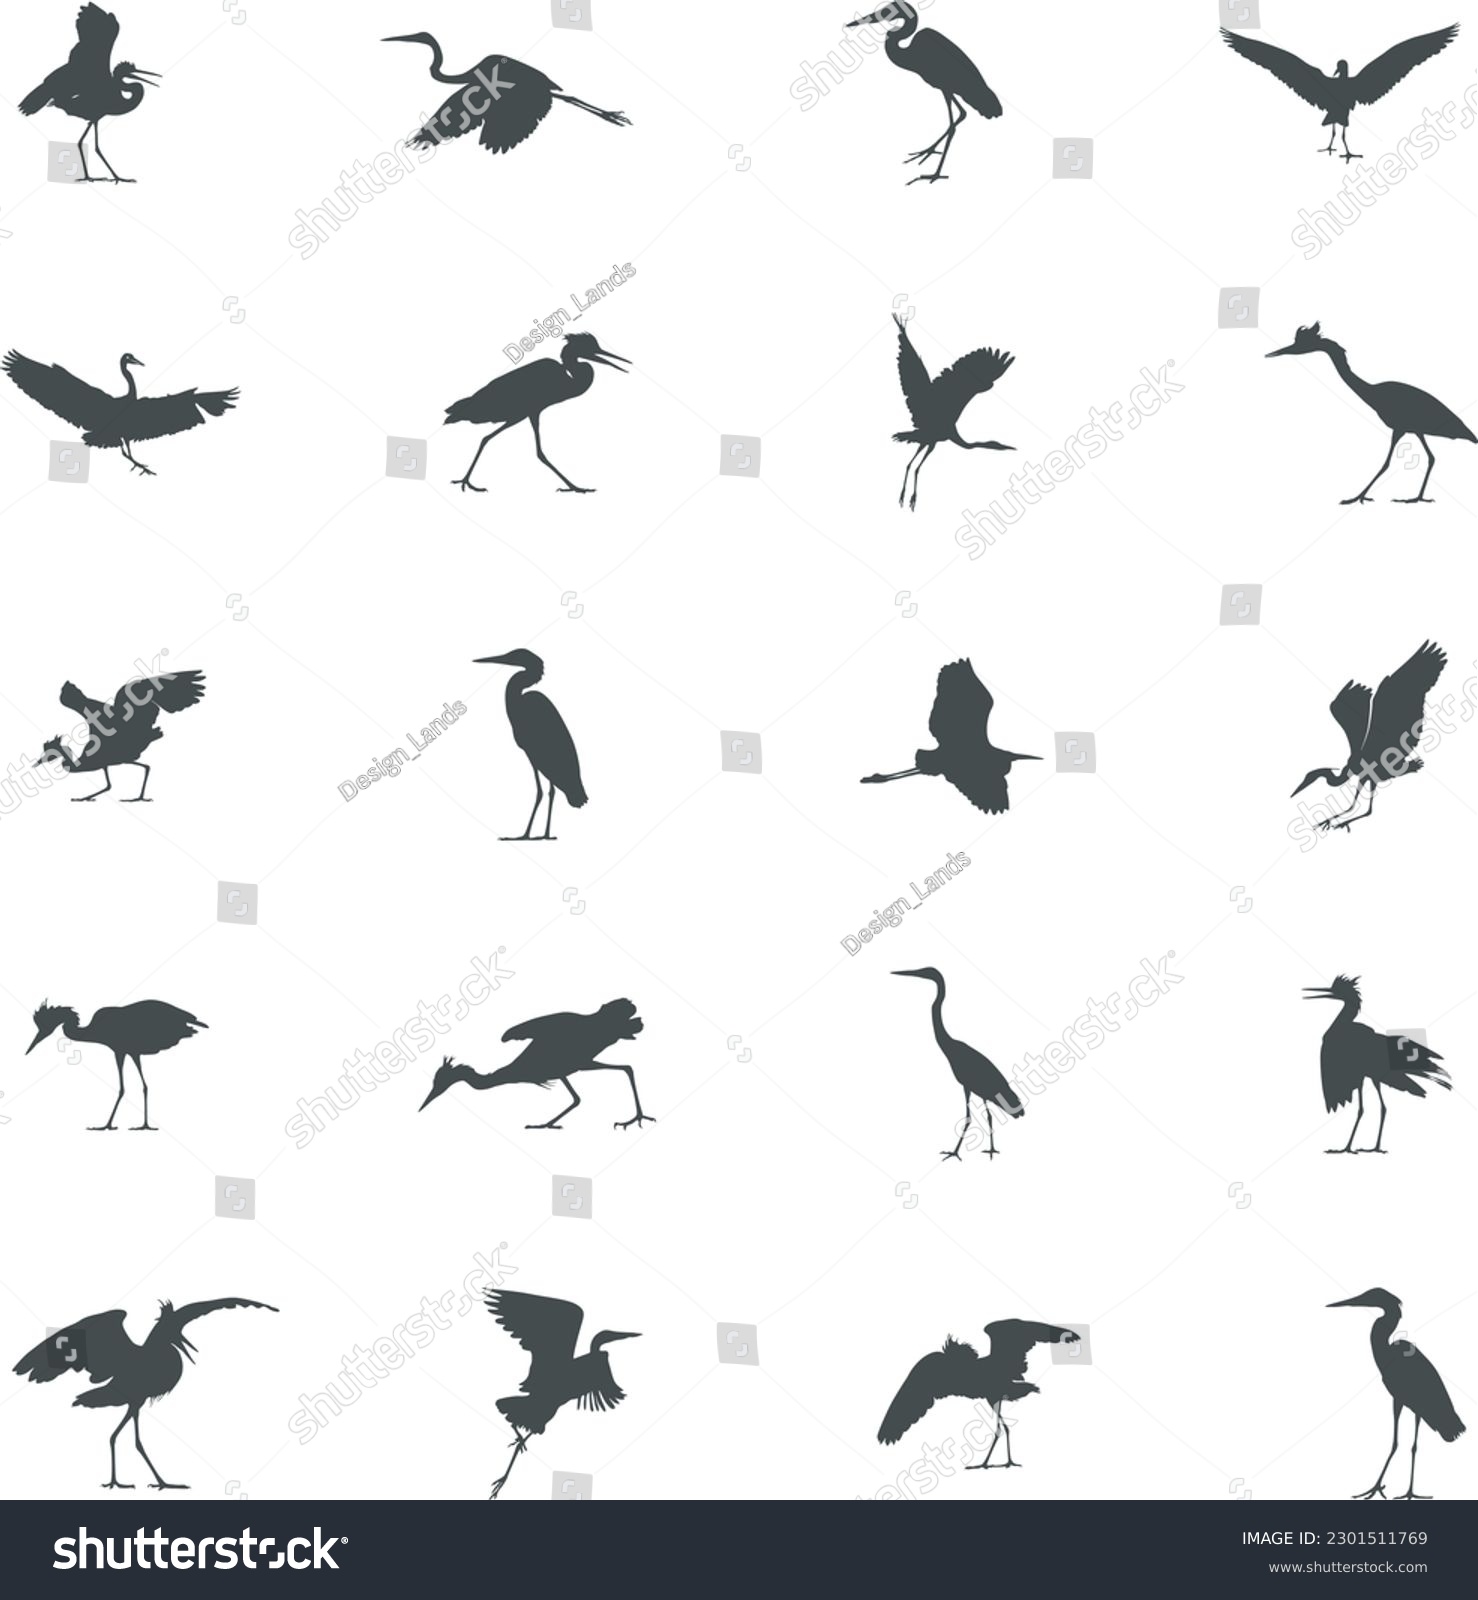 SVG of Heron silhouette, Heron SVG, Heron vector illustration, Bird silhouette, Heron icon set svg